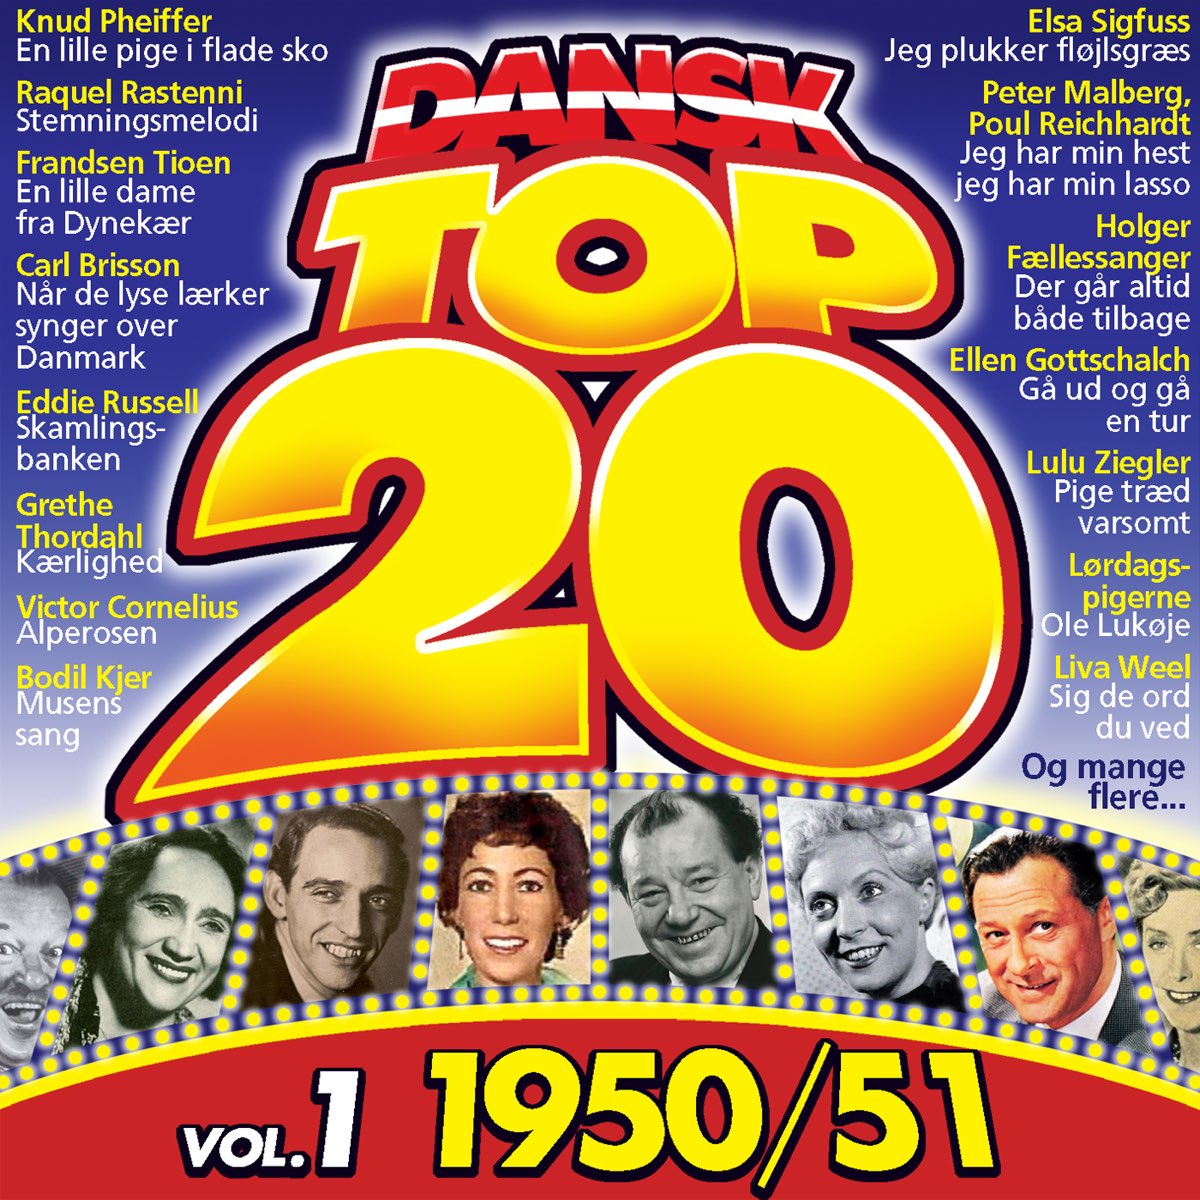 Dansk TOP 20 Vol. 1, 1950 51 by Various Artists on Apple Music